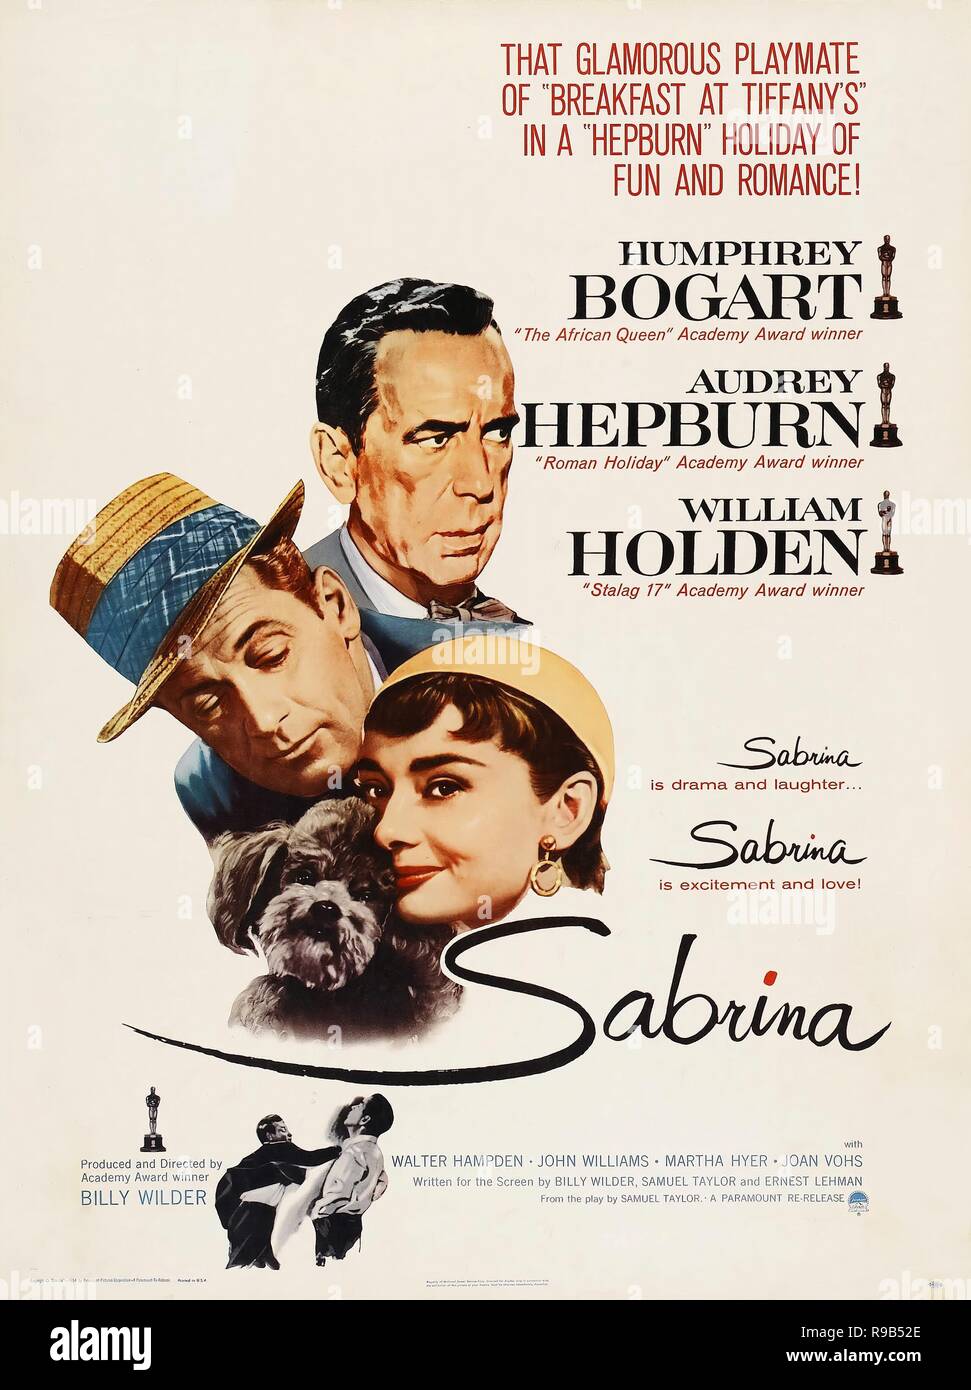 Original film title: SABRINA. English title: SABRINA. Year: 1954. Director: BILLY WILDER. Credit: PARAMOUNT PICTURES / Album Stock Photo